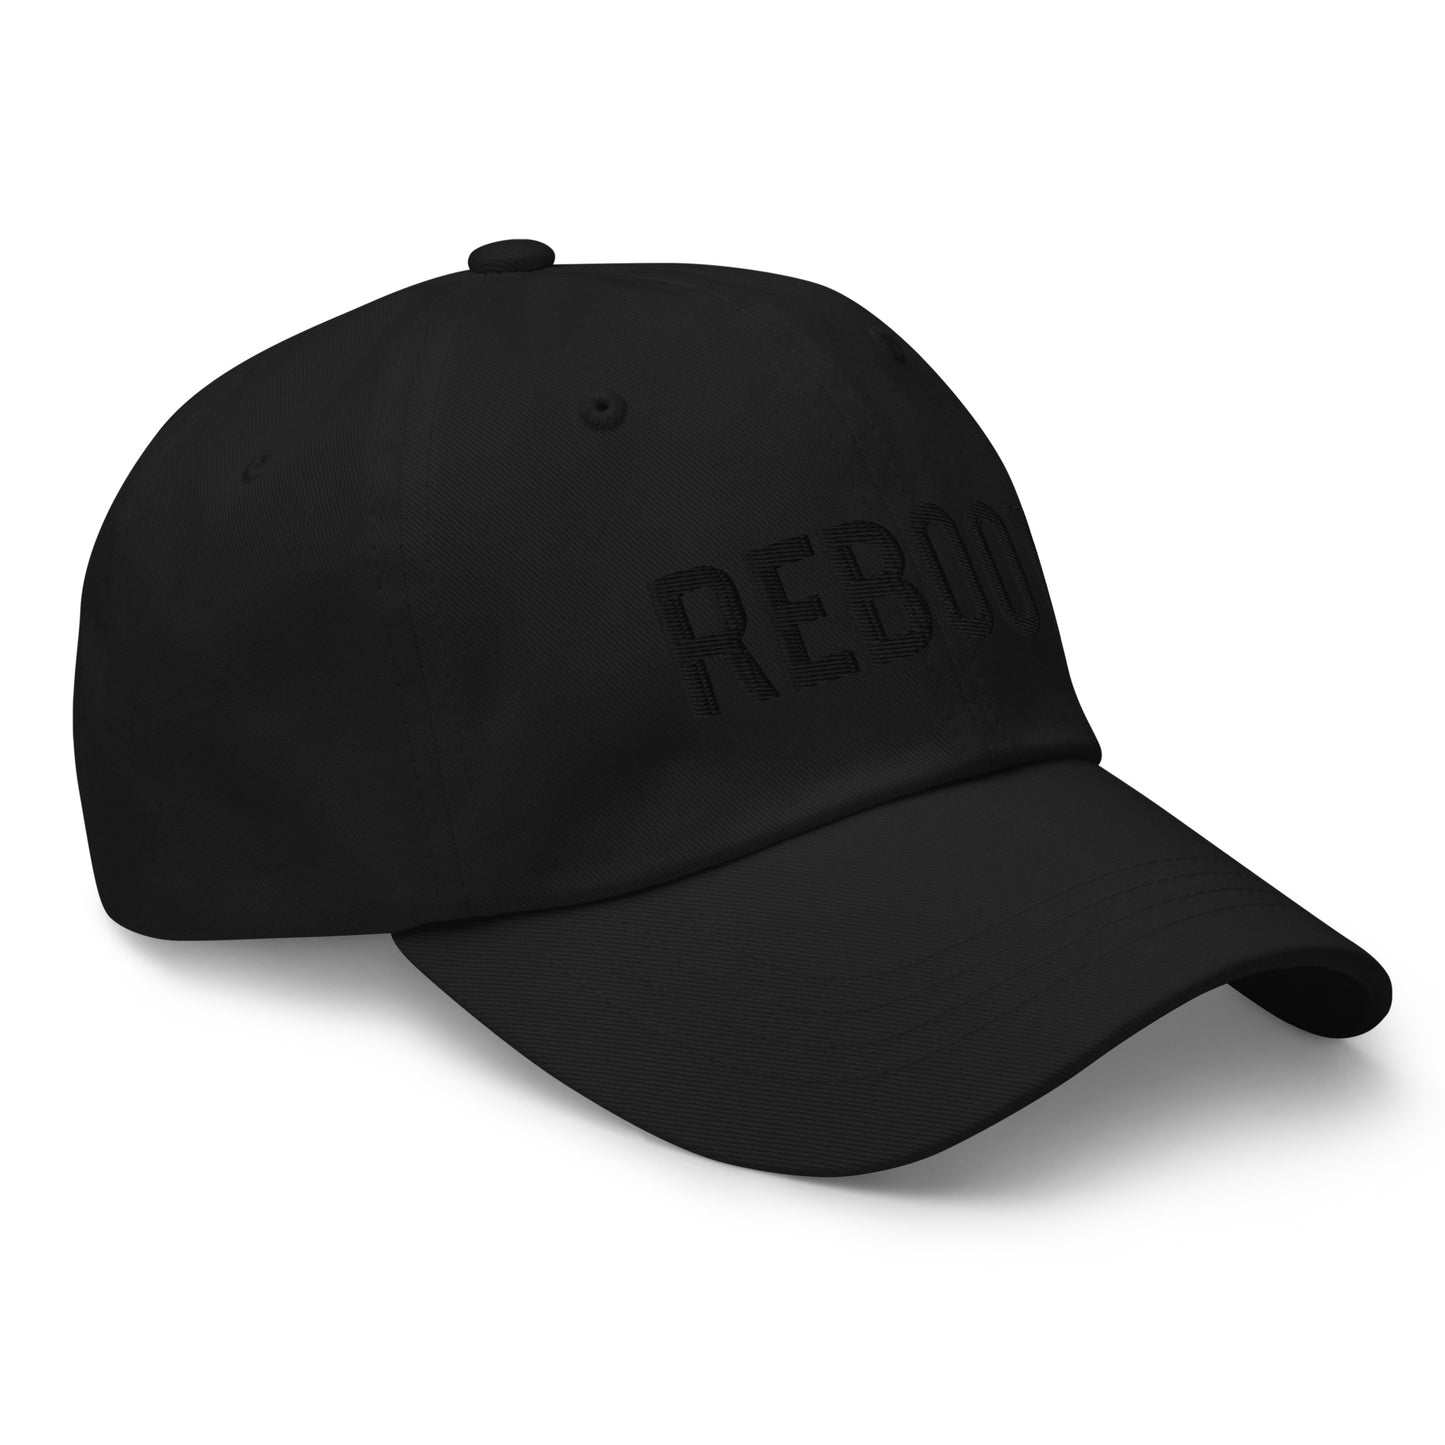 REBOOT Black Dad hat